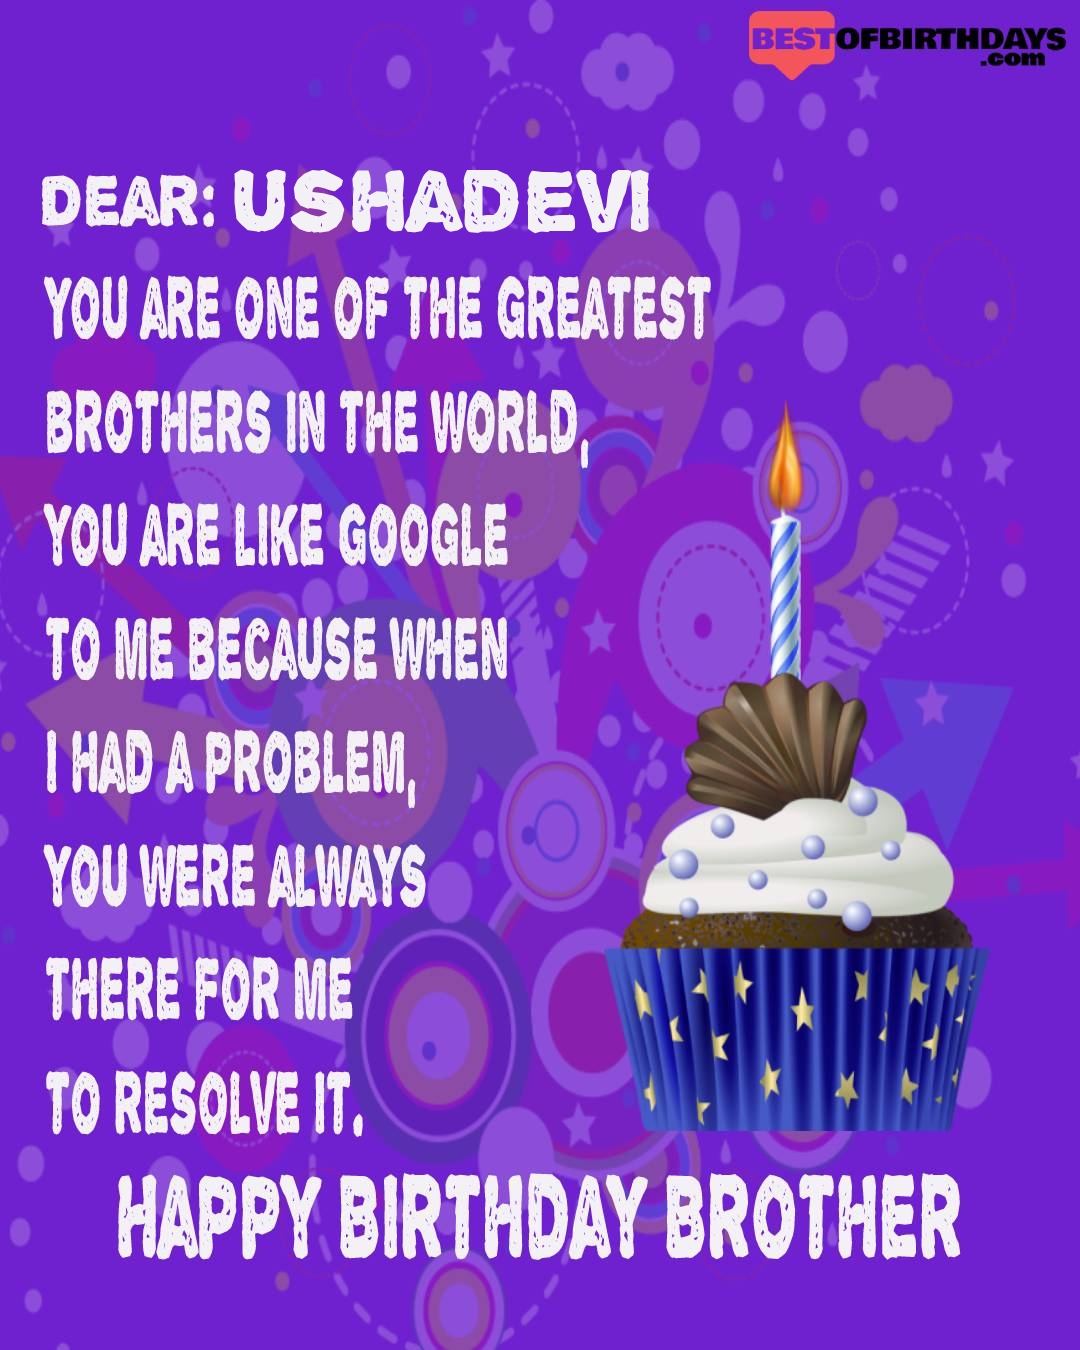 Happy birthday ushadevi bhai brother bro